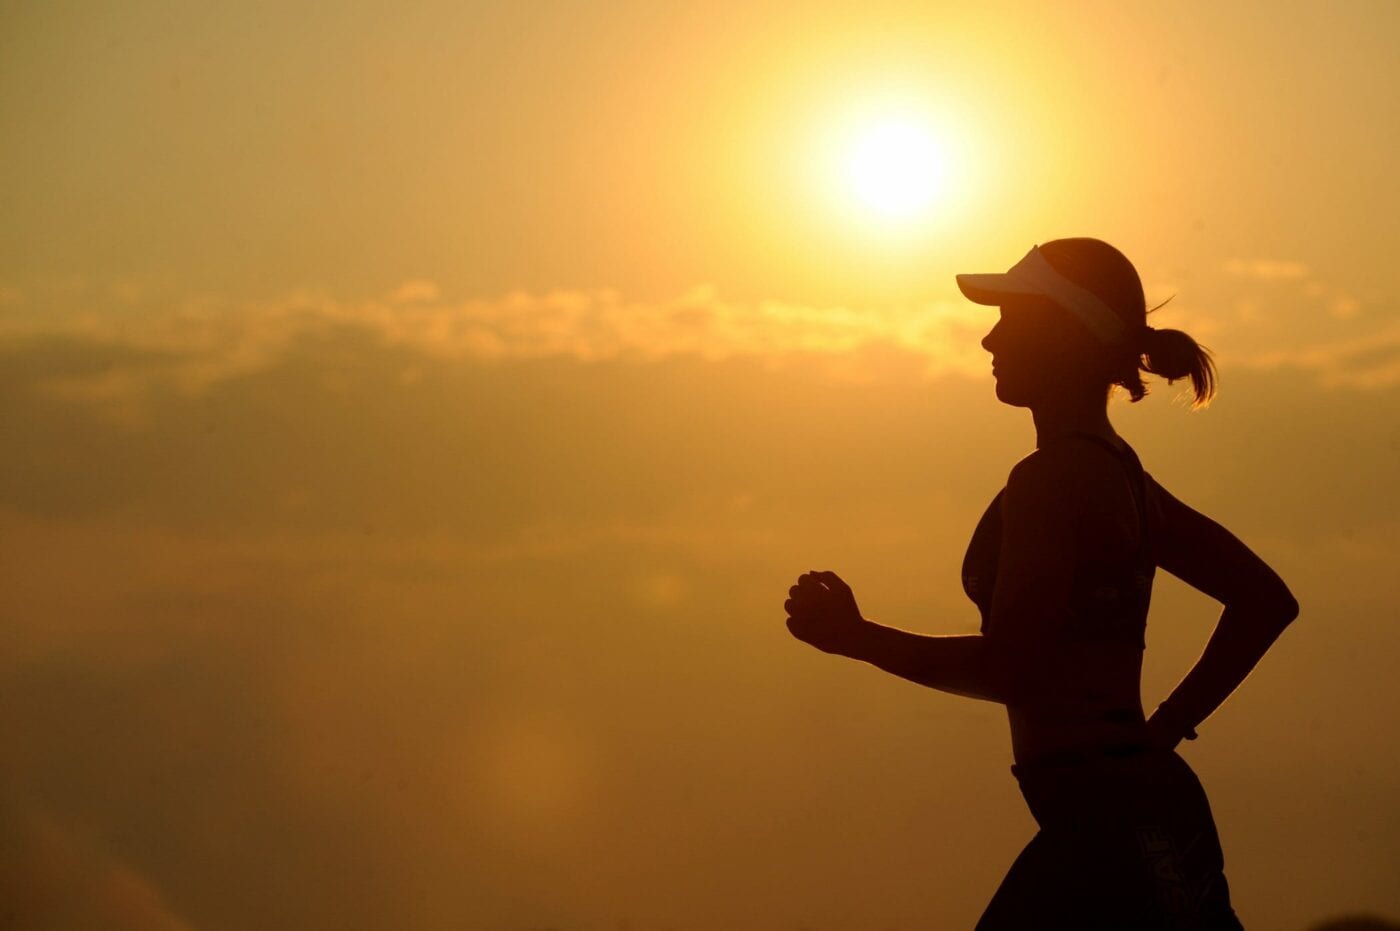 Running Athletes not immune to eating disorder